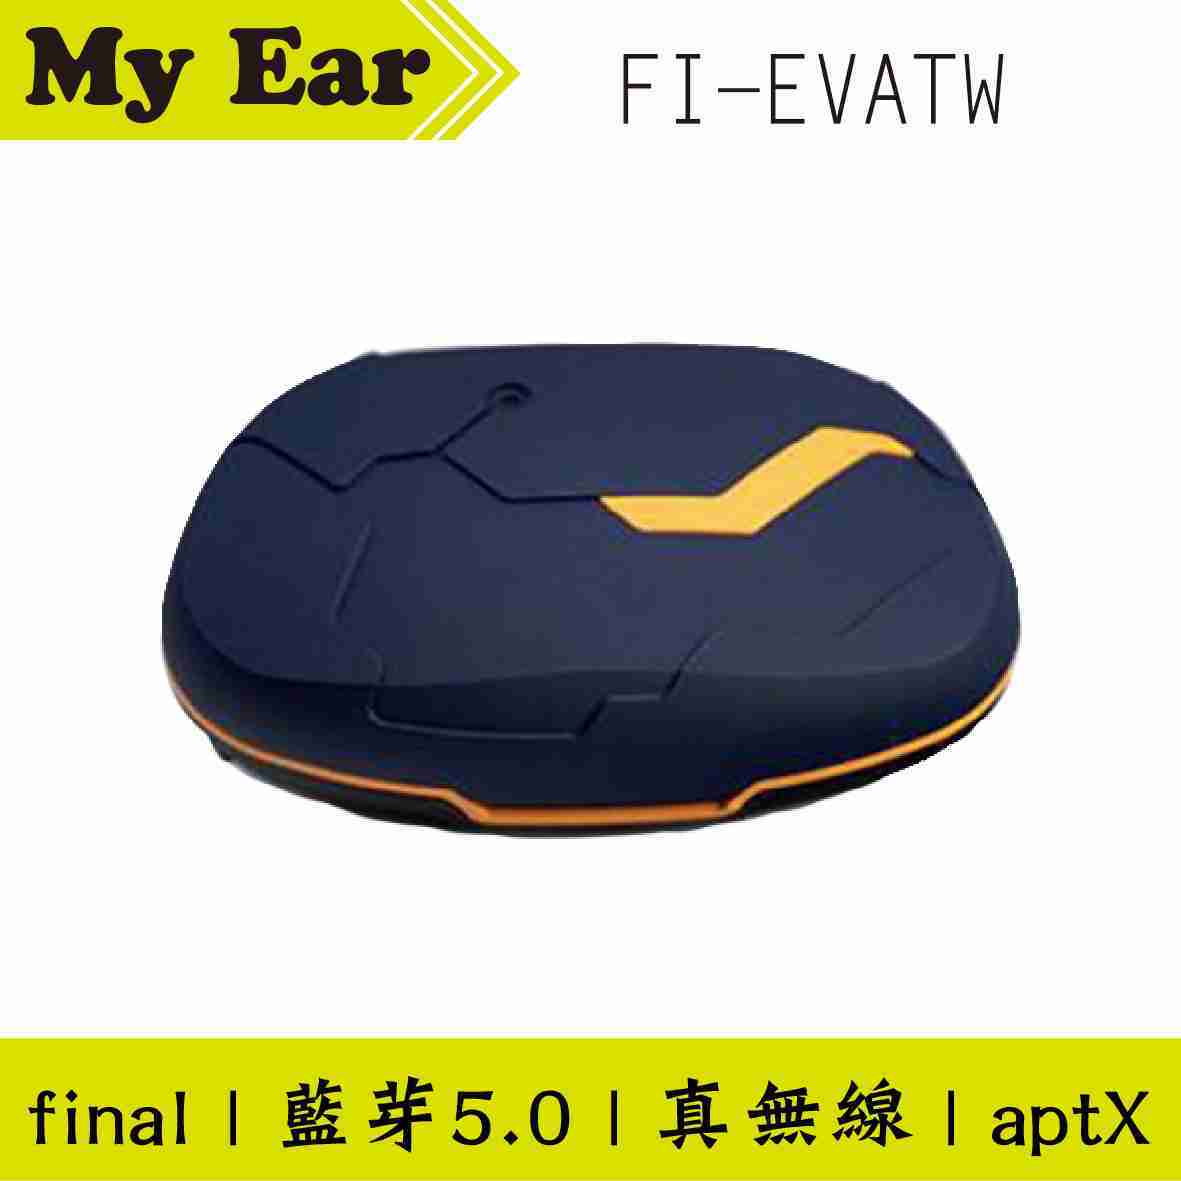 Final FI-EVATW 新世紀 福音戰士 藍芽 真無線 耳機 | My Ear 耳機專門店